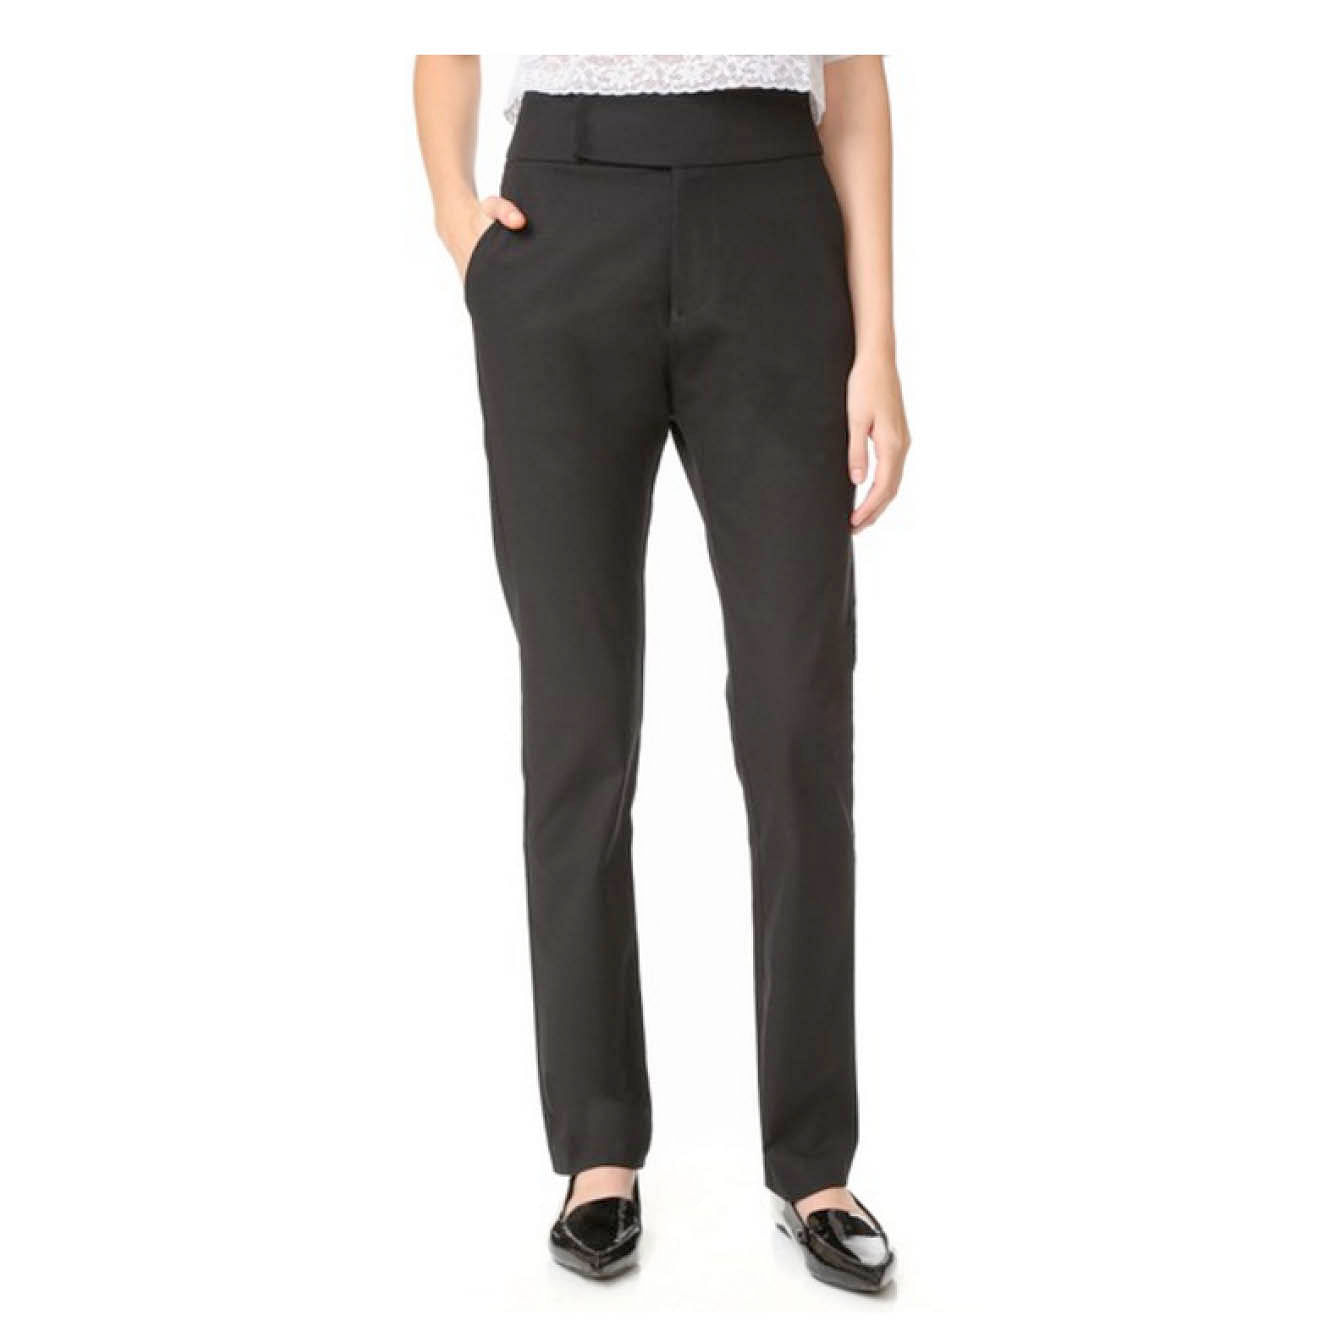 Matin Pocket Pants, USD264 (SGD367.30), from www.shopbop.com